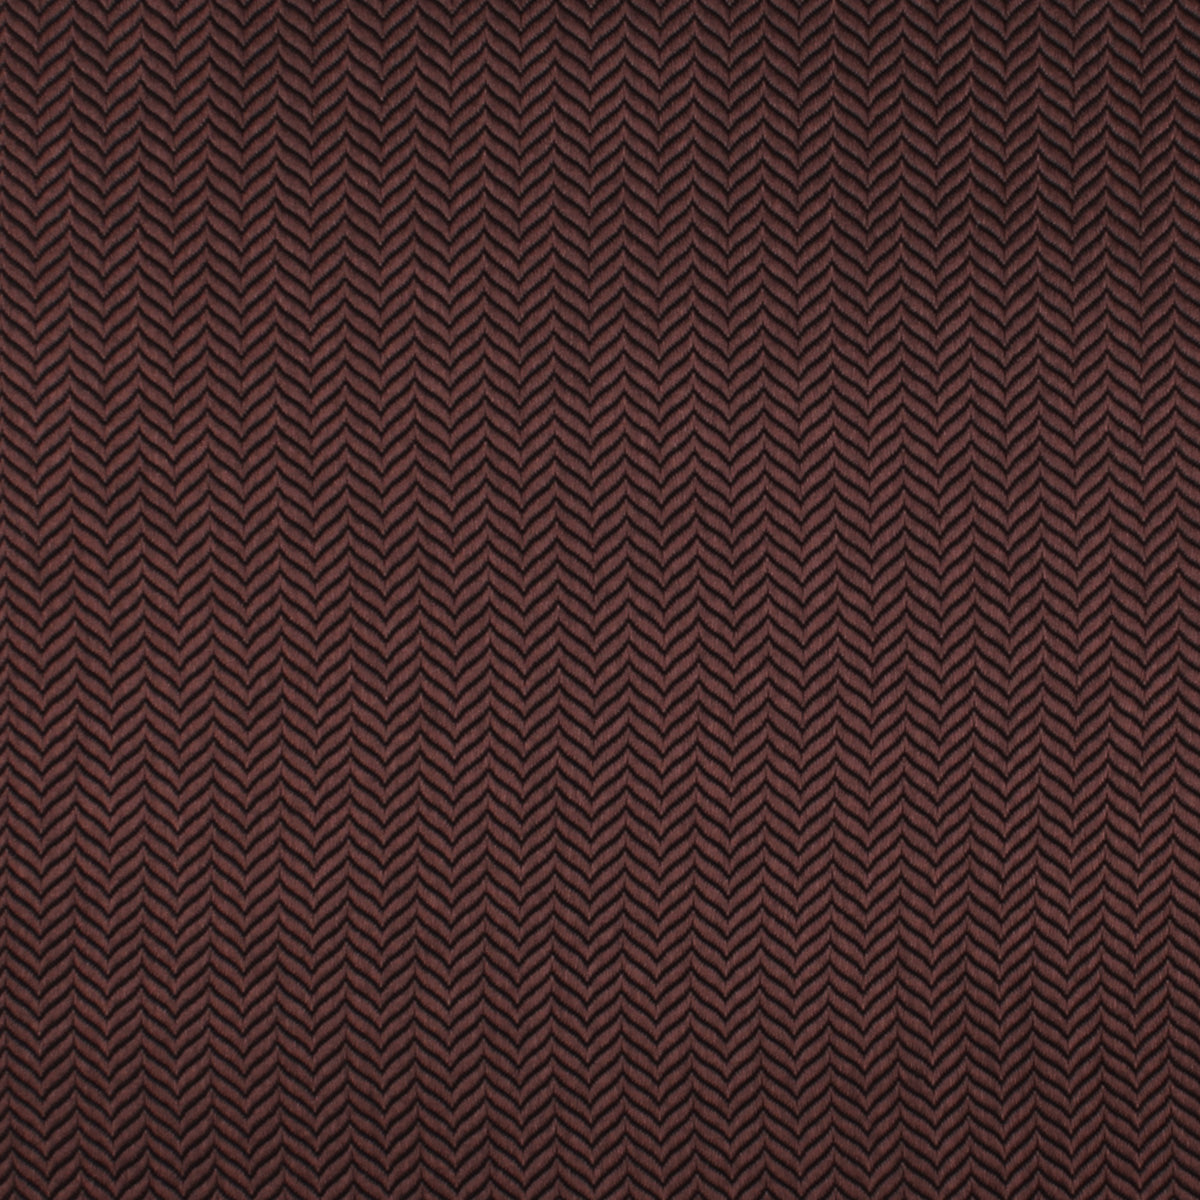 Russet Brown Herringbone Pocket Square Fabric